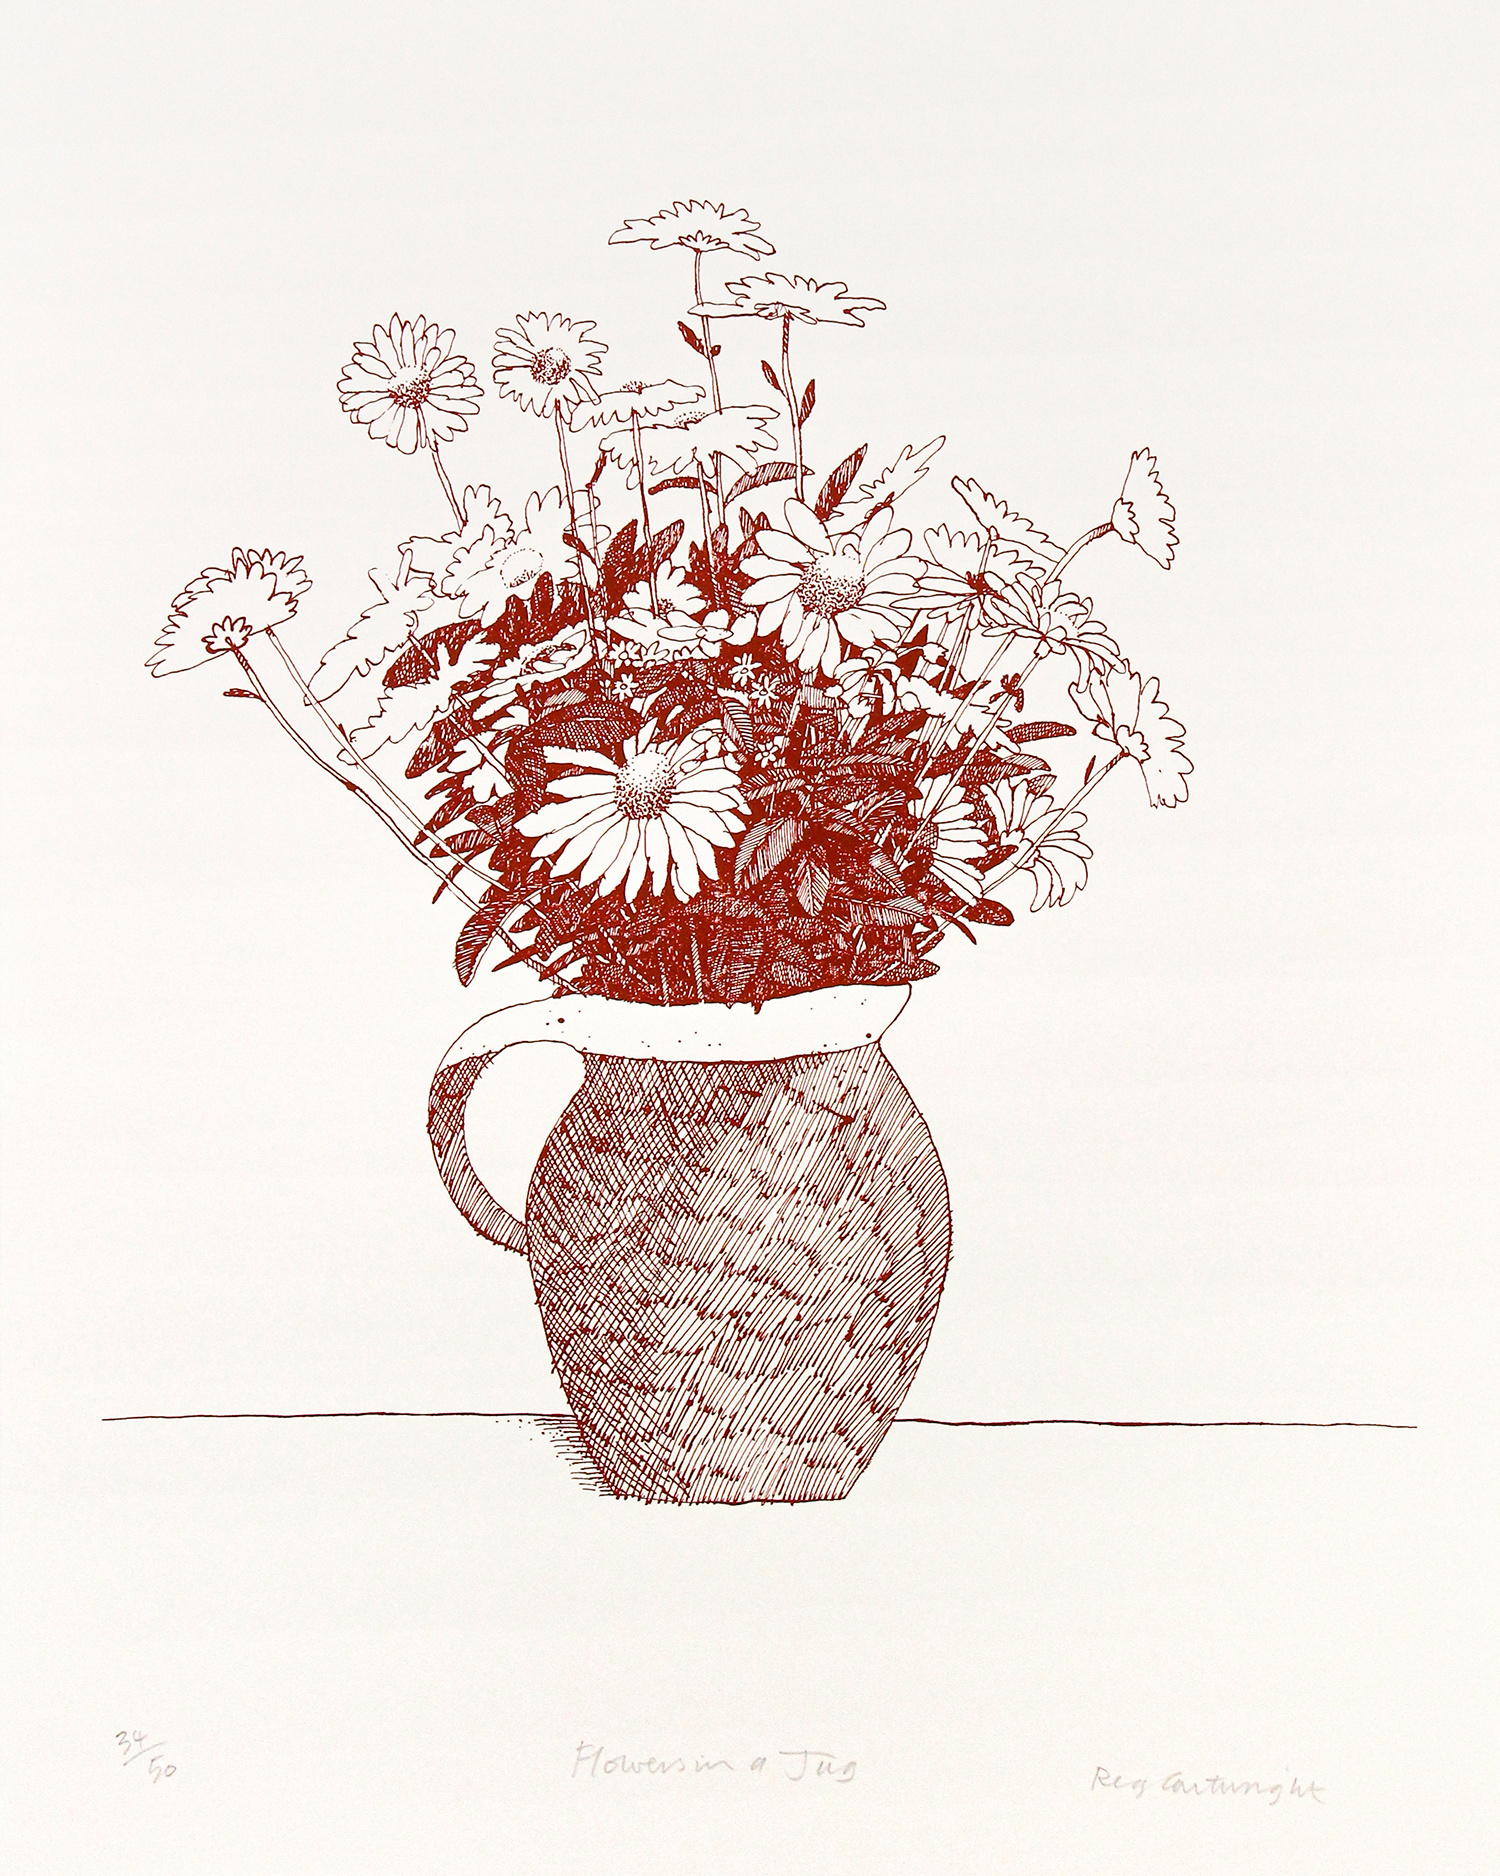 Flowers in a Jug by Reg Cartwright